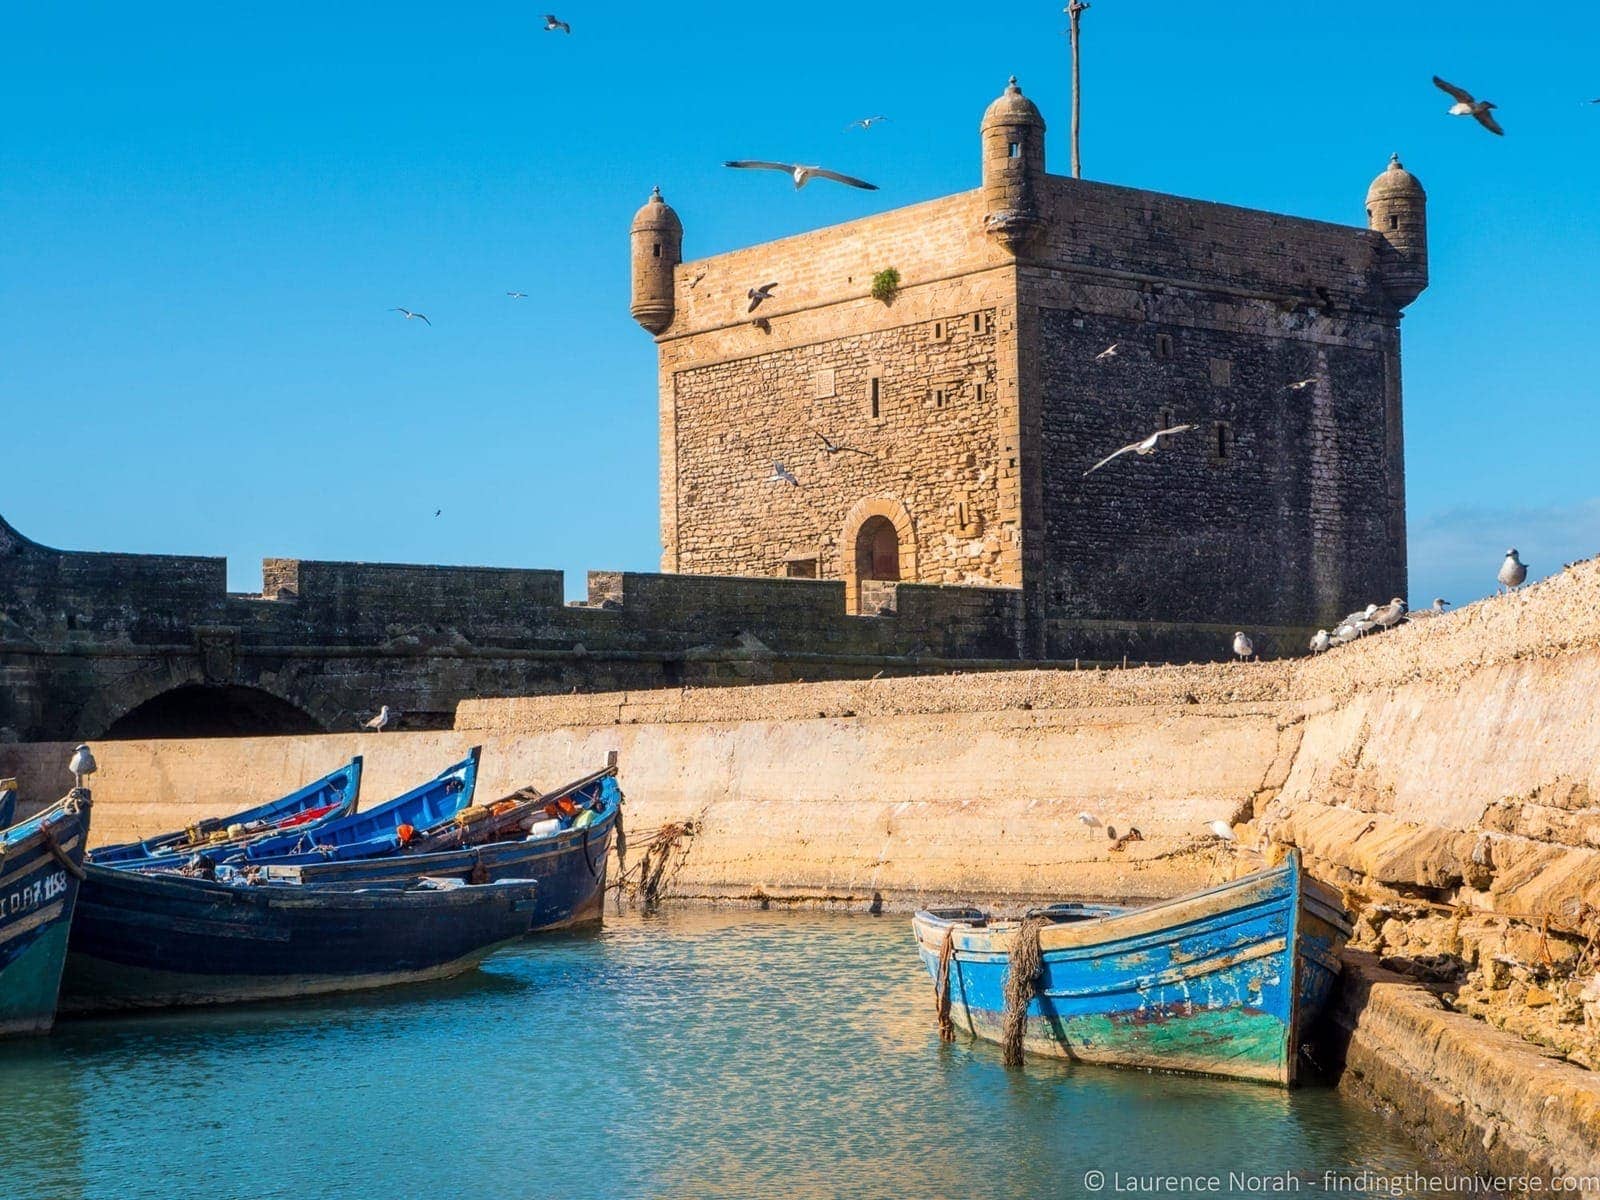 Essaouira citadel